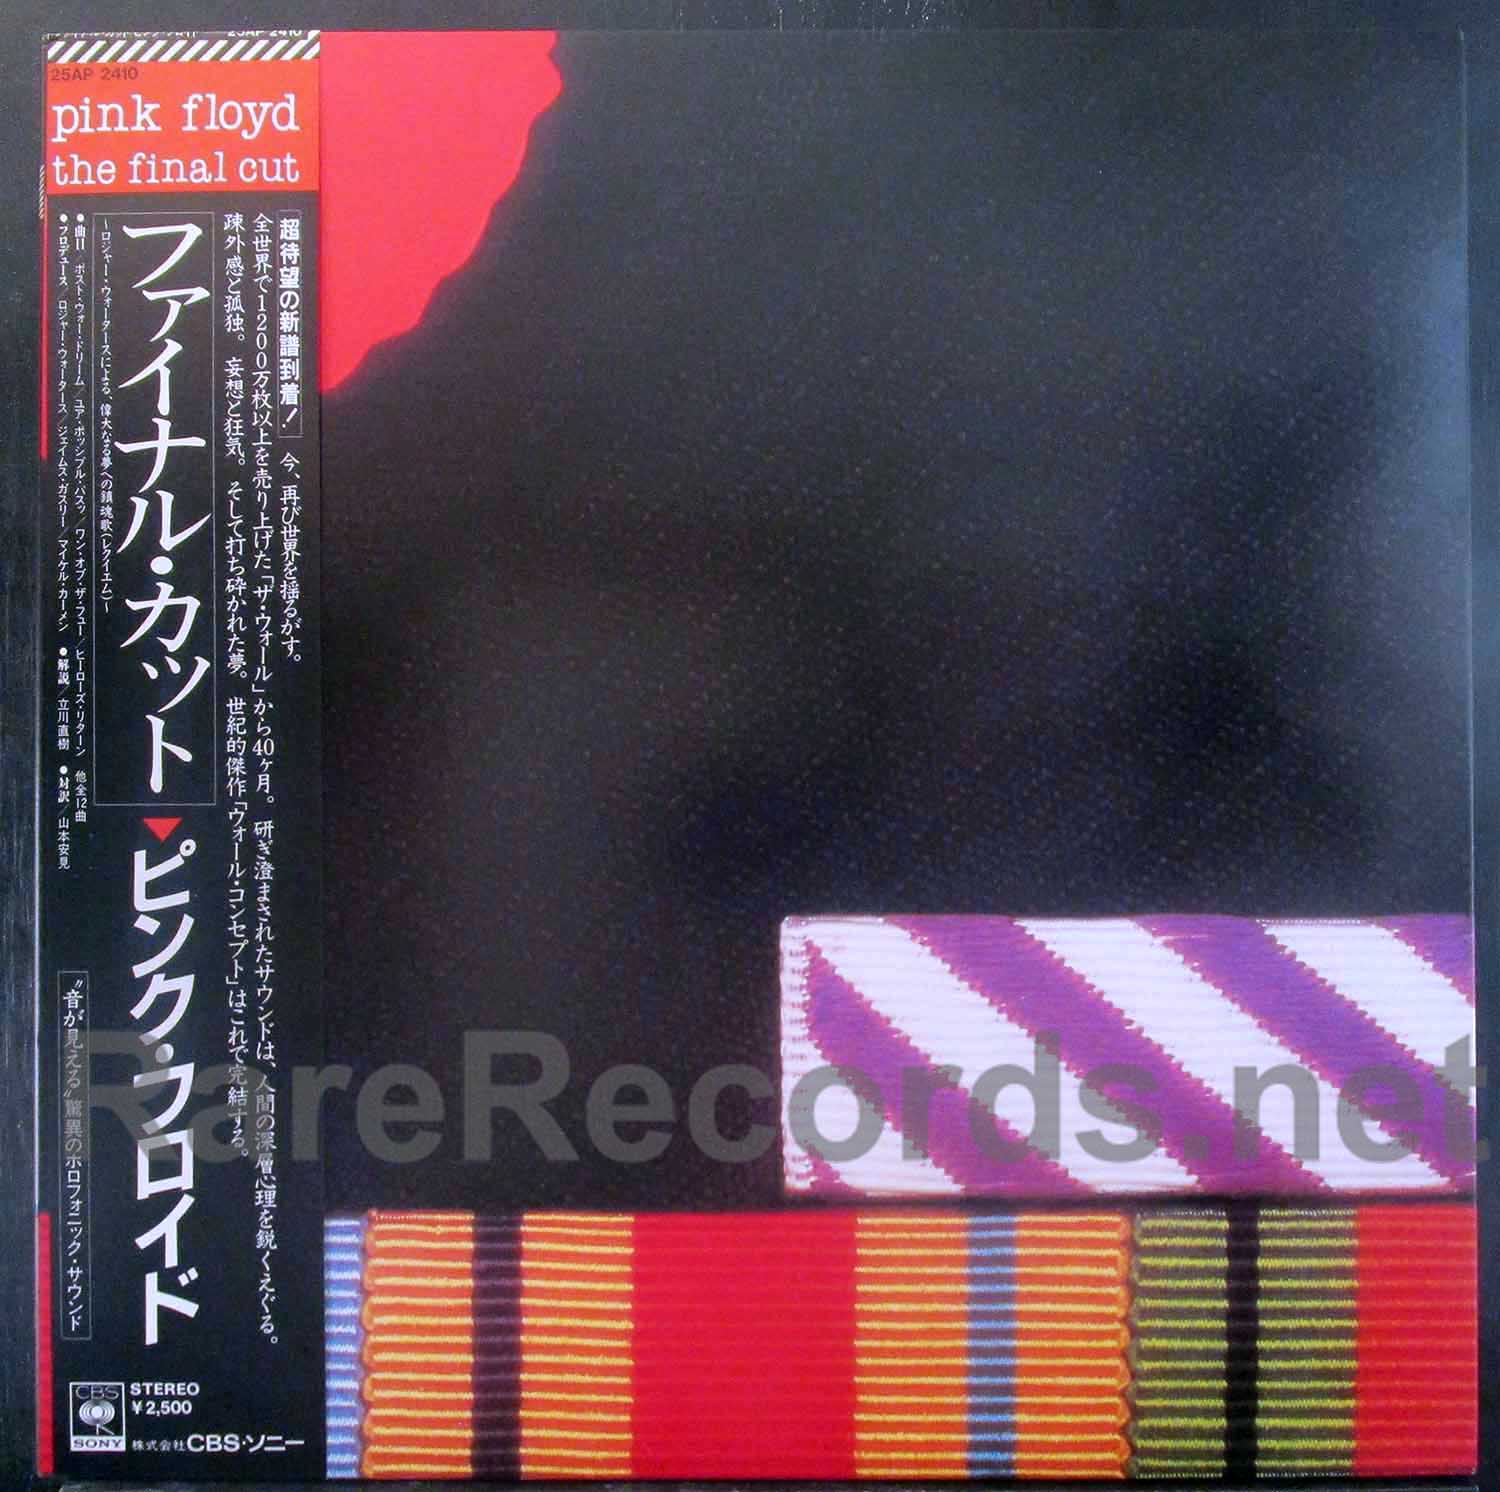 Pink Floyd - The Final Cut original Japan LP with obi